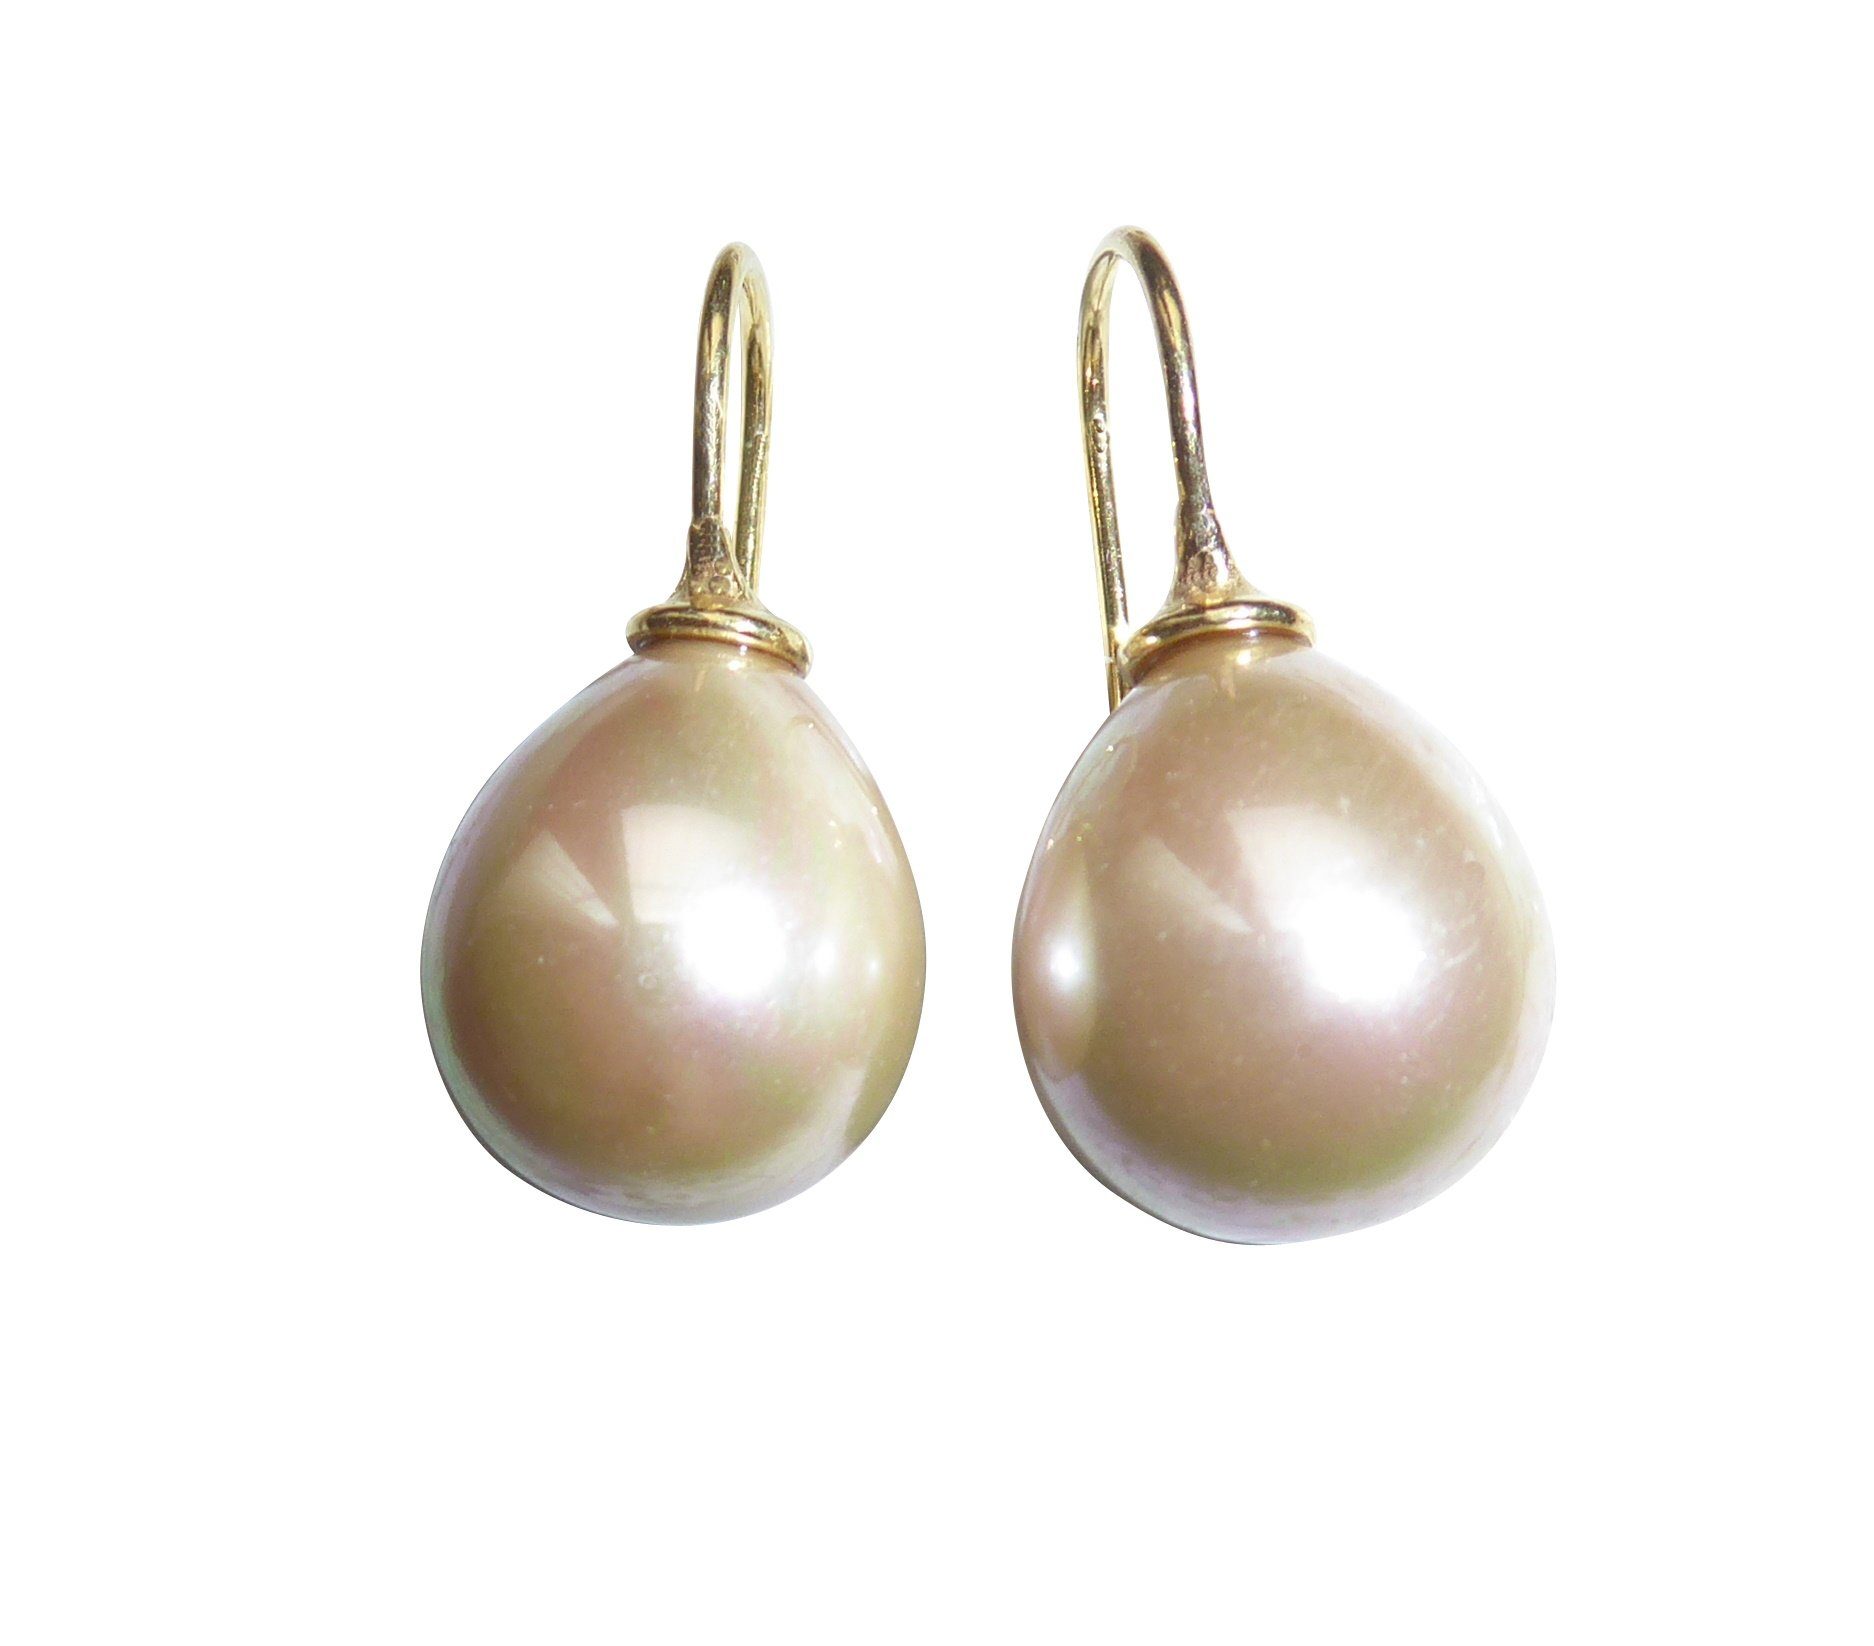 Perlenohrringe Alltag, Perlenschmuck Dina für Mugello klassisch Basic-Ohrringe puder gold-platt. Frauen